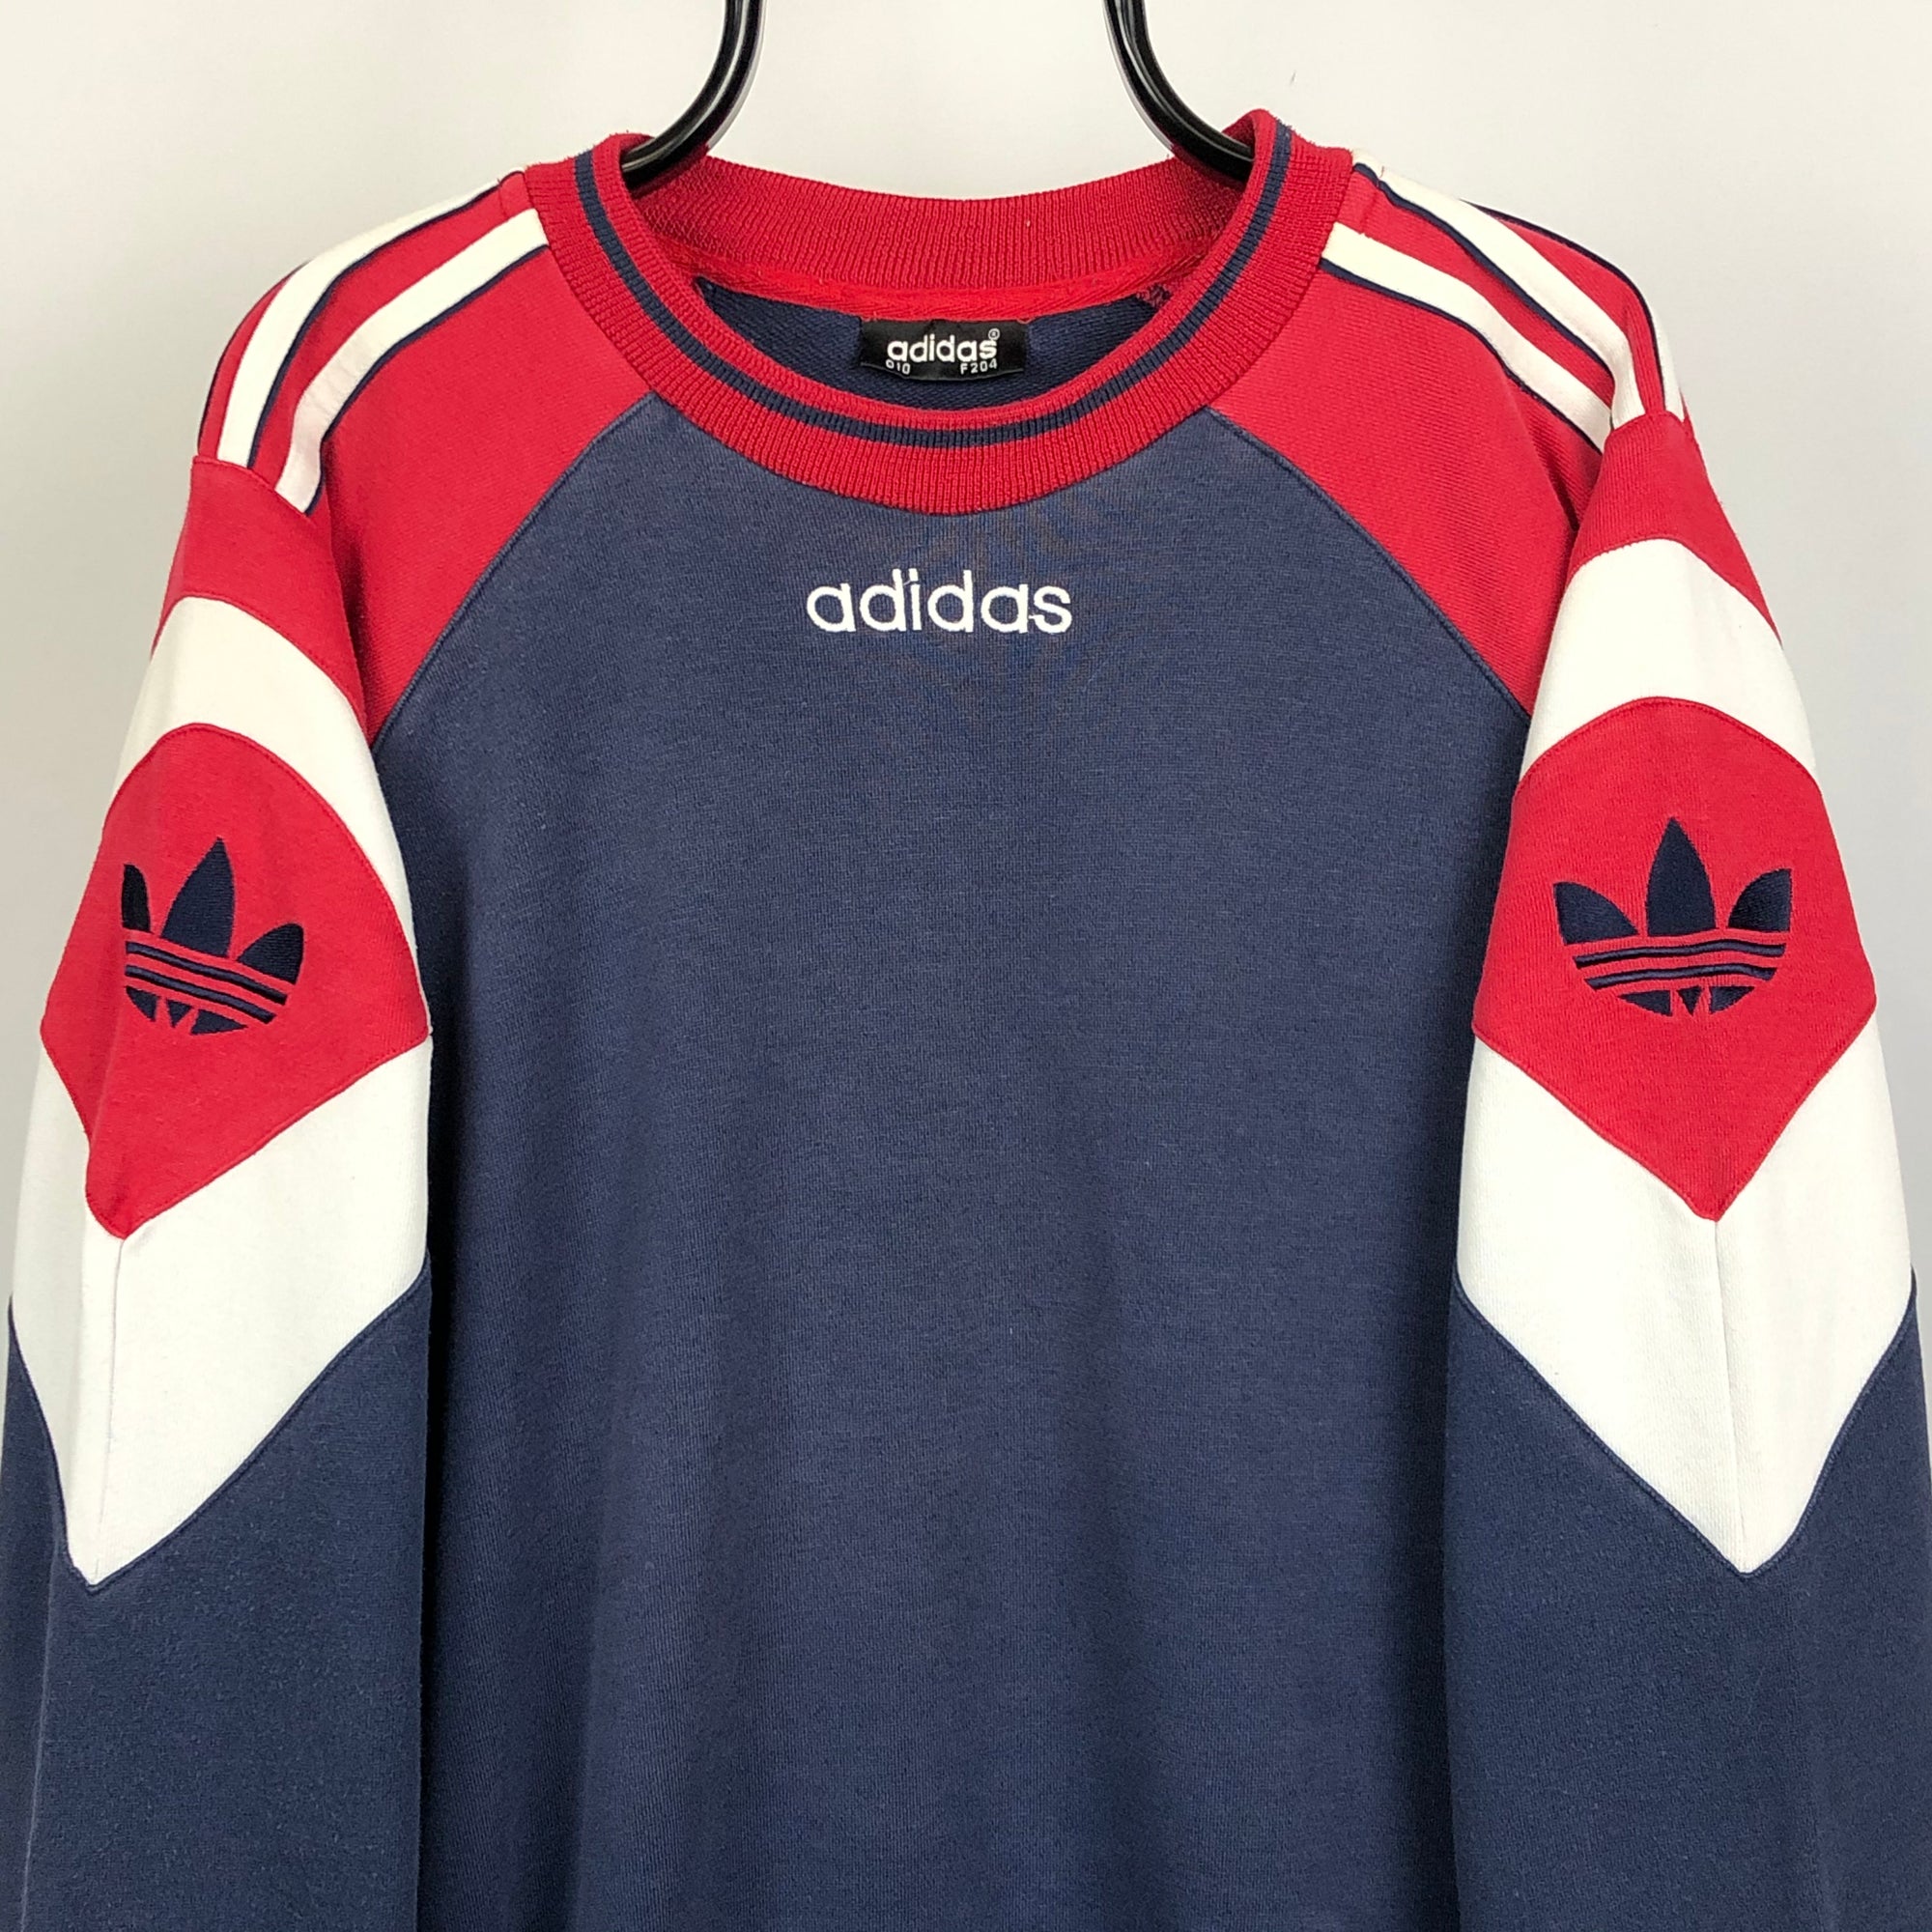 Vintage Adidas Small Spellout Tricolour Sweatshirt - Men's XL/Women's XXL